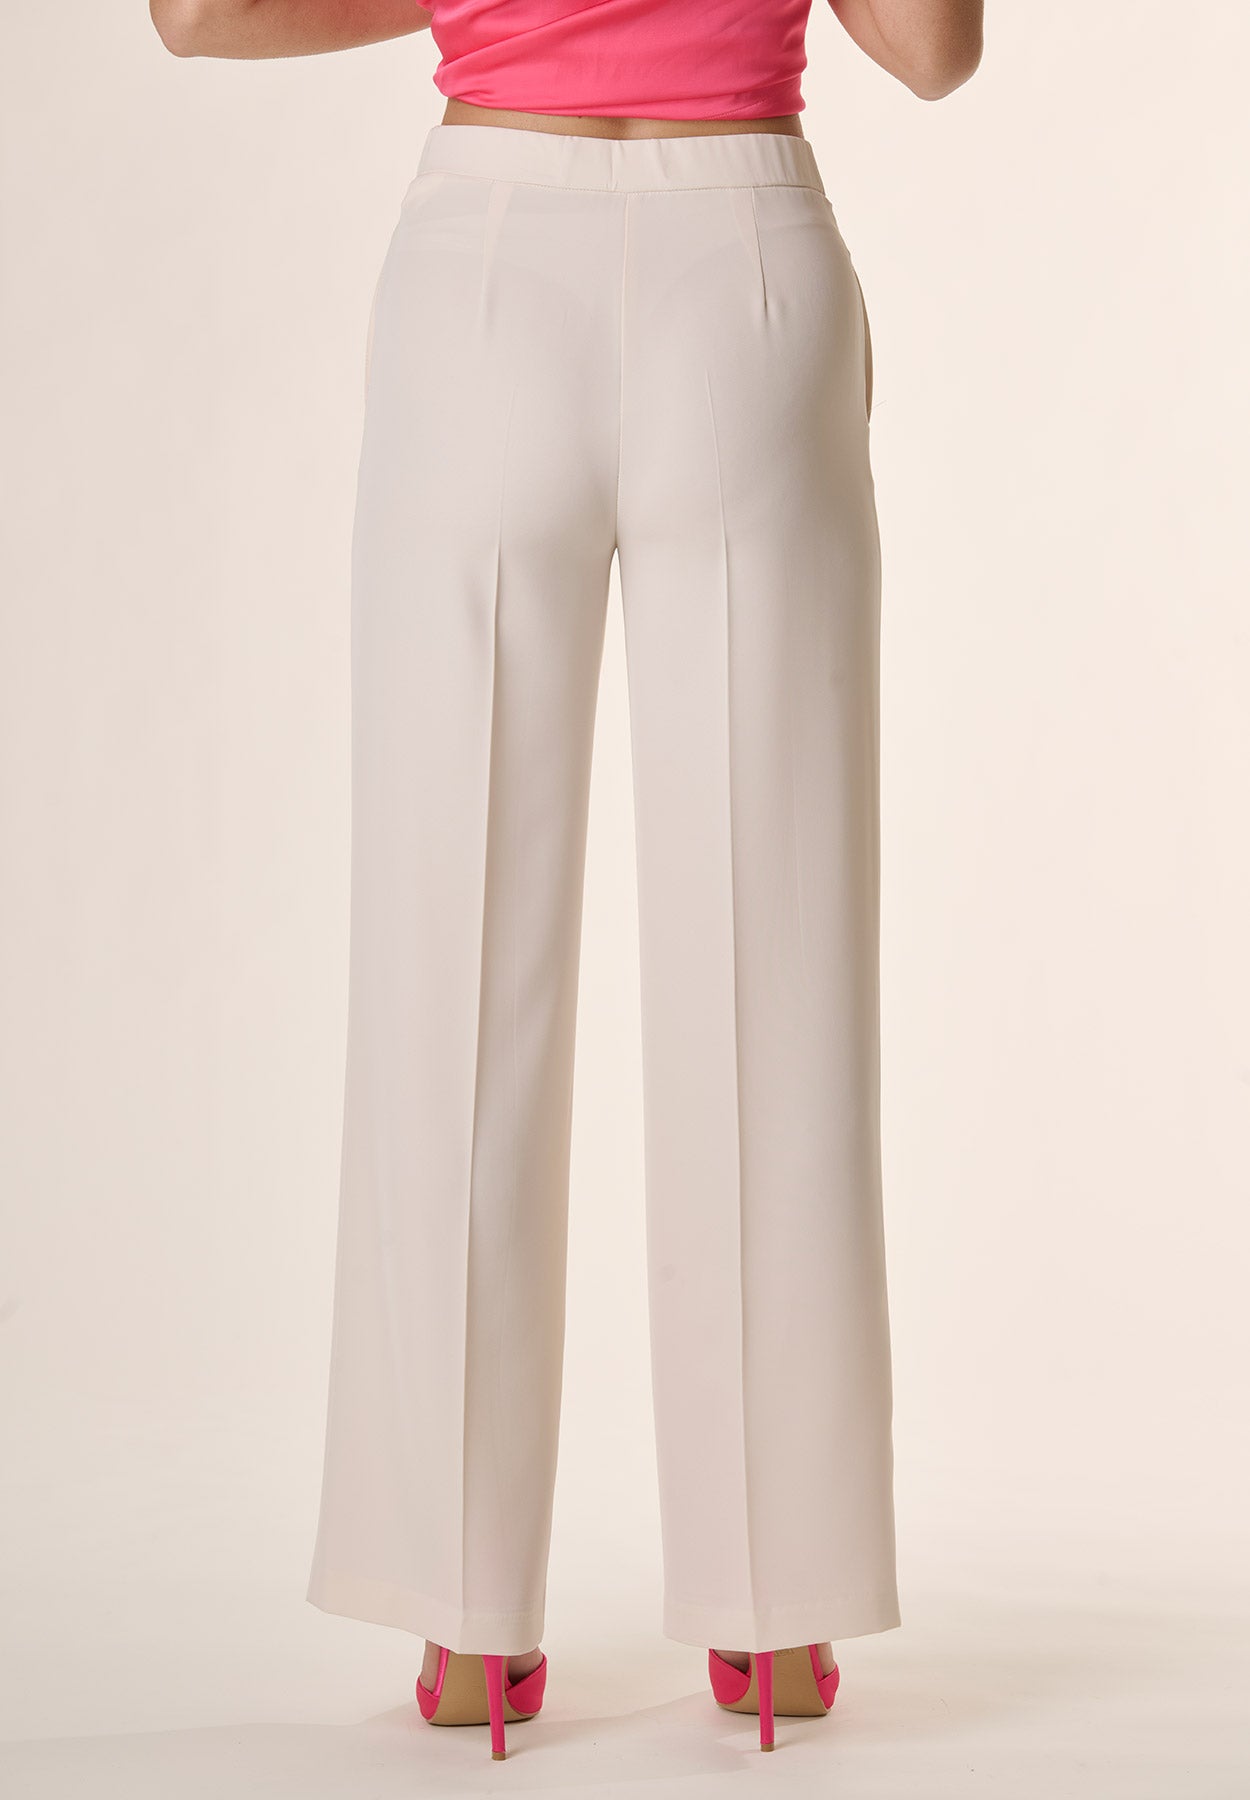 Cream palazzo trousers